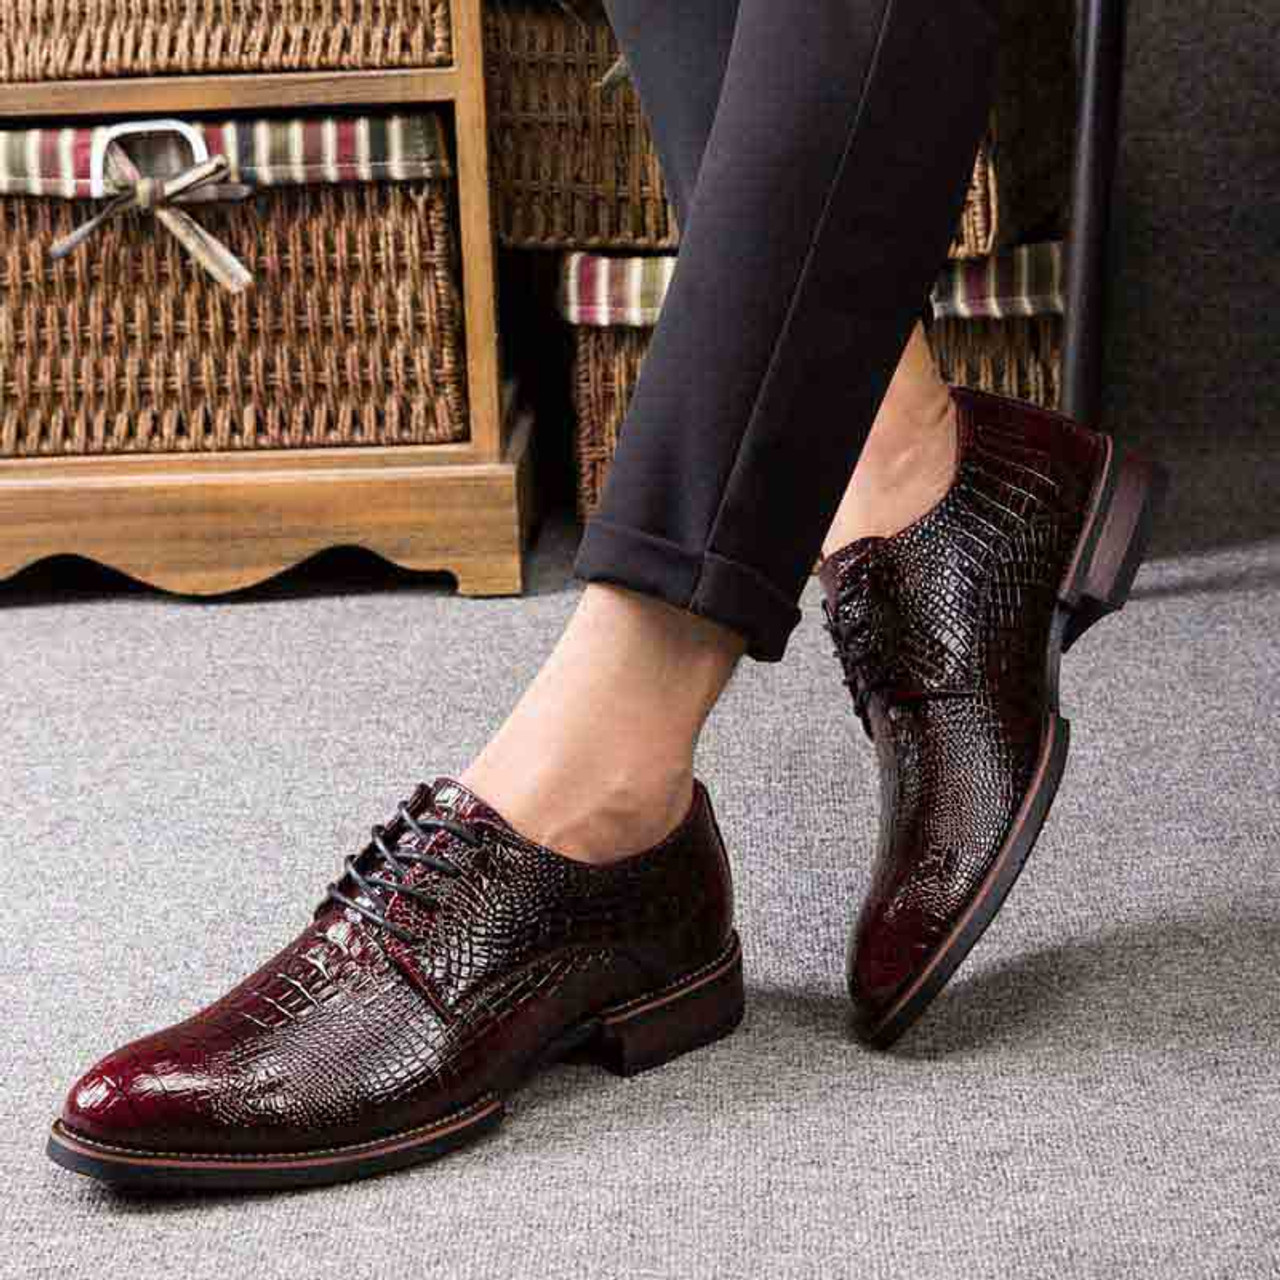 Red crocodile pattern derby lace up dress shoe | Mens dress shoes ...